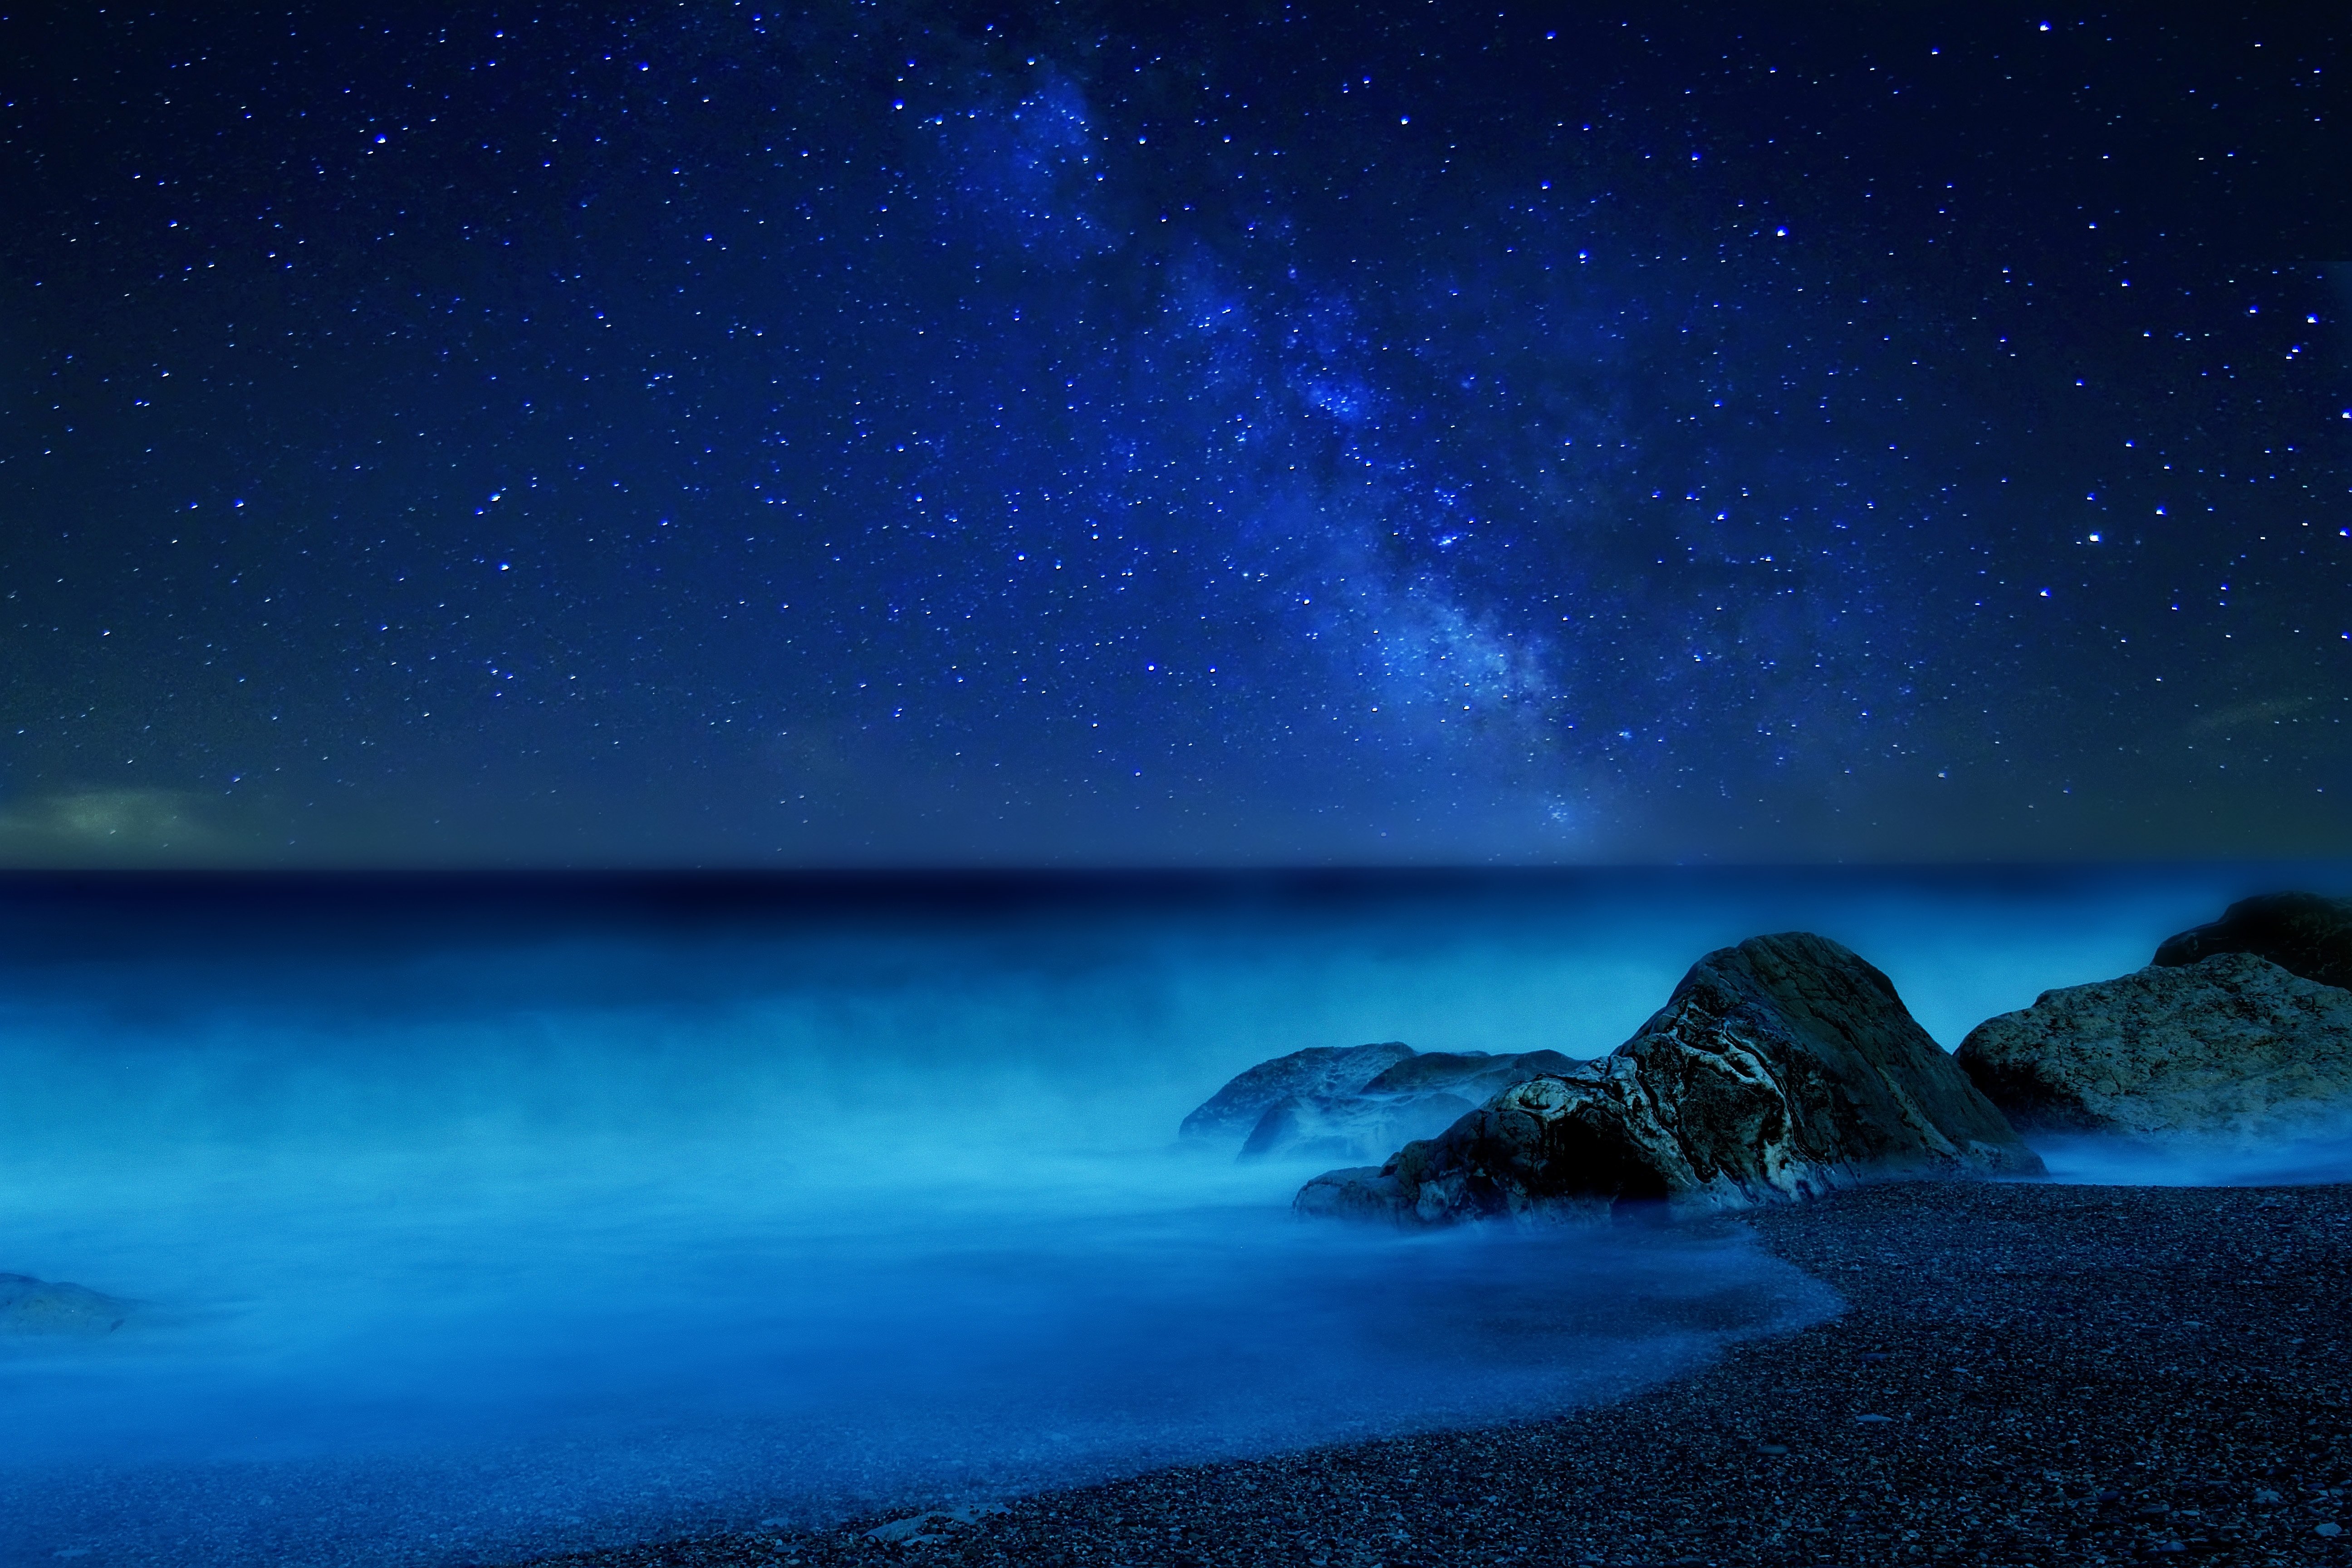 Включи звезда берег. Ночное море. Ночь в море. Море ночь звезды. Ночное небо со звездами.